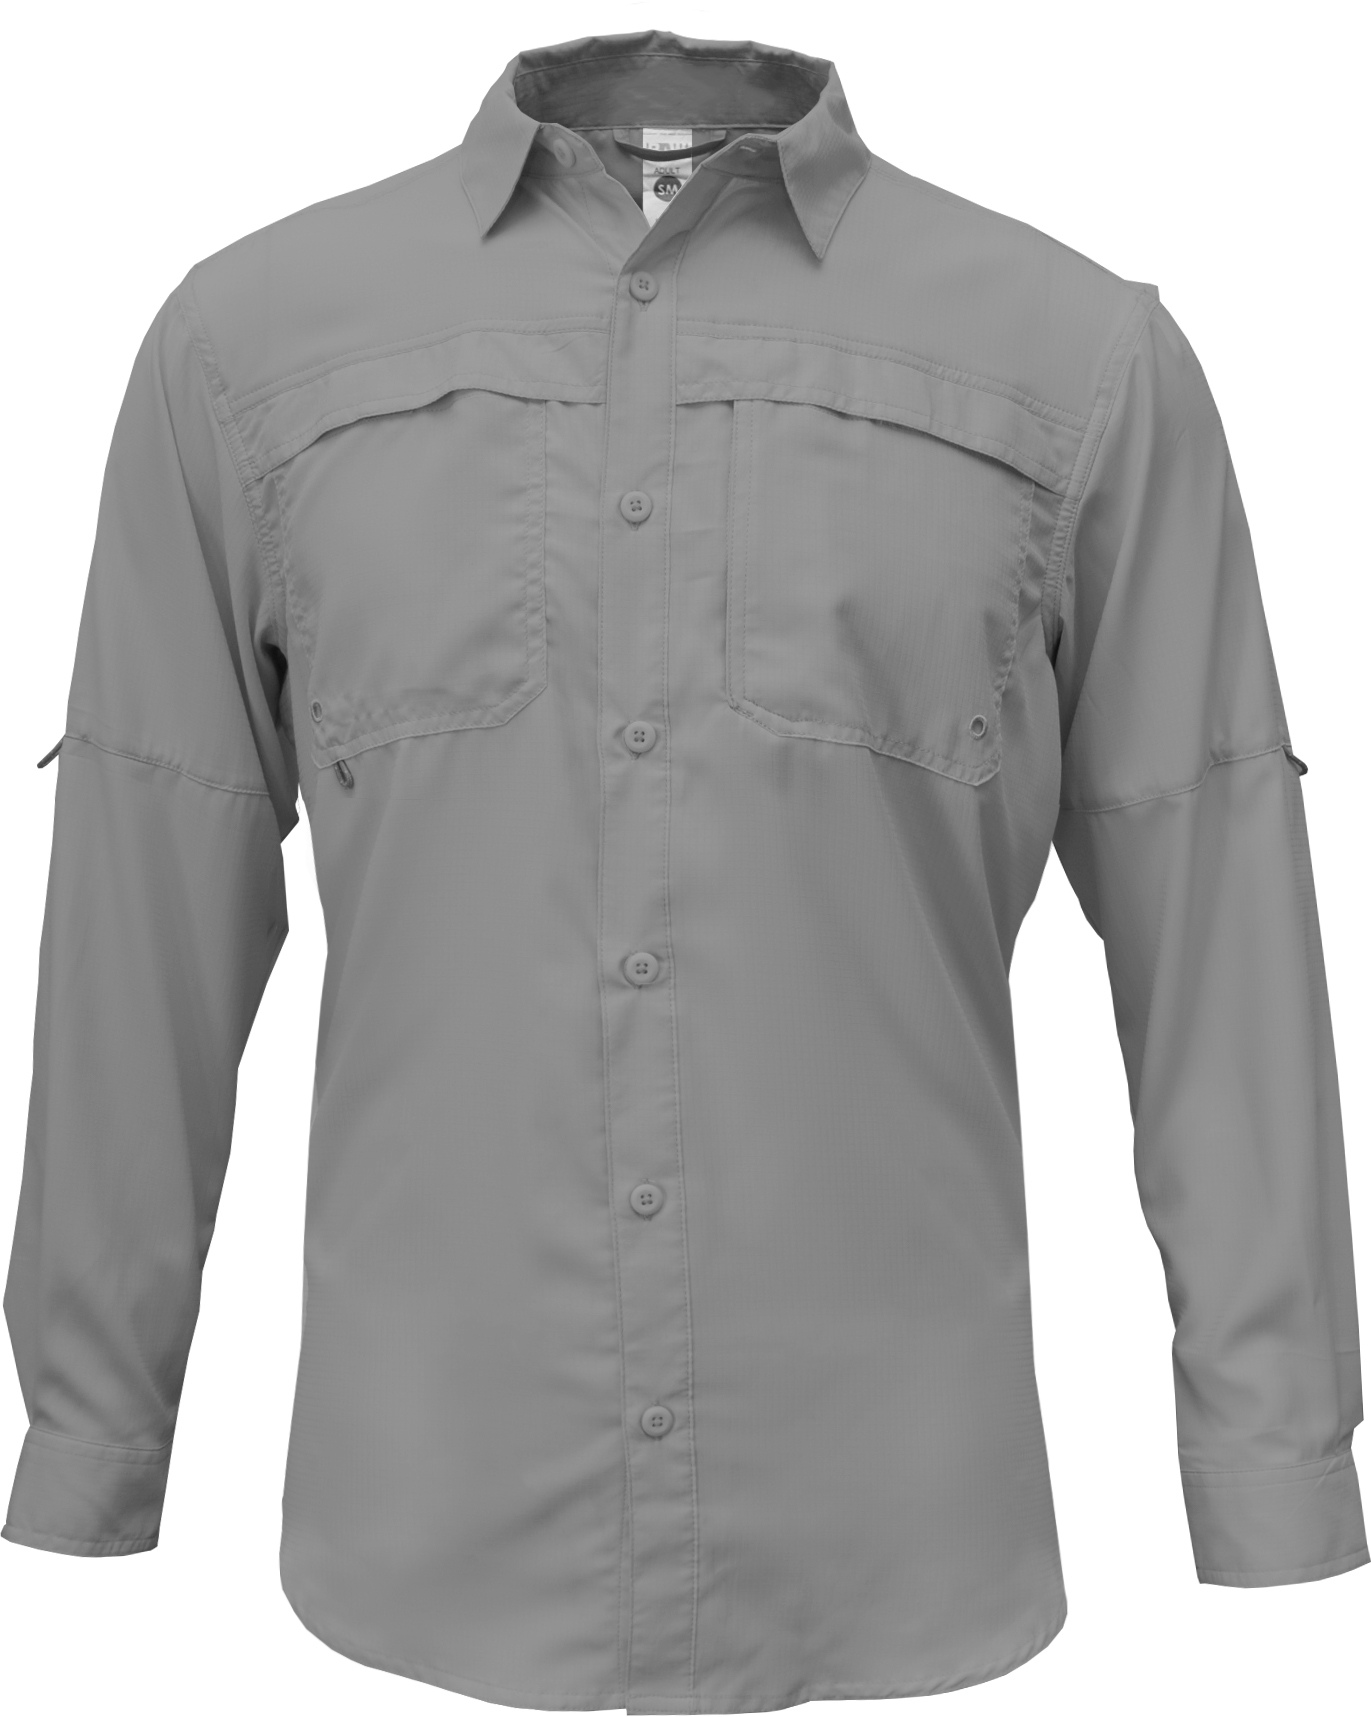 BAW Athletic Wear 3000 - Adult Long Sleeve Fishing Shirt $26.25 -  Woven/Dress Shirts